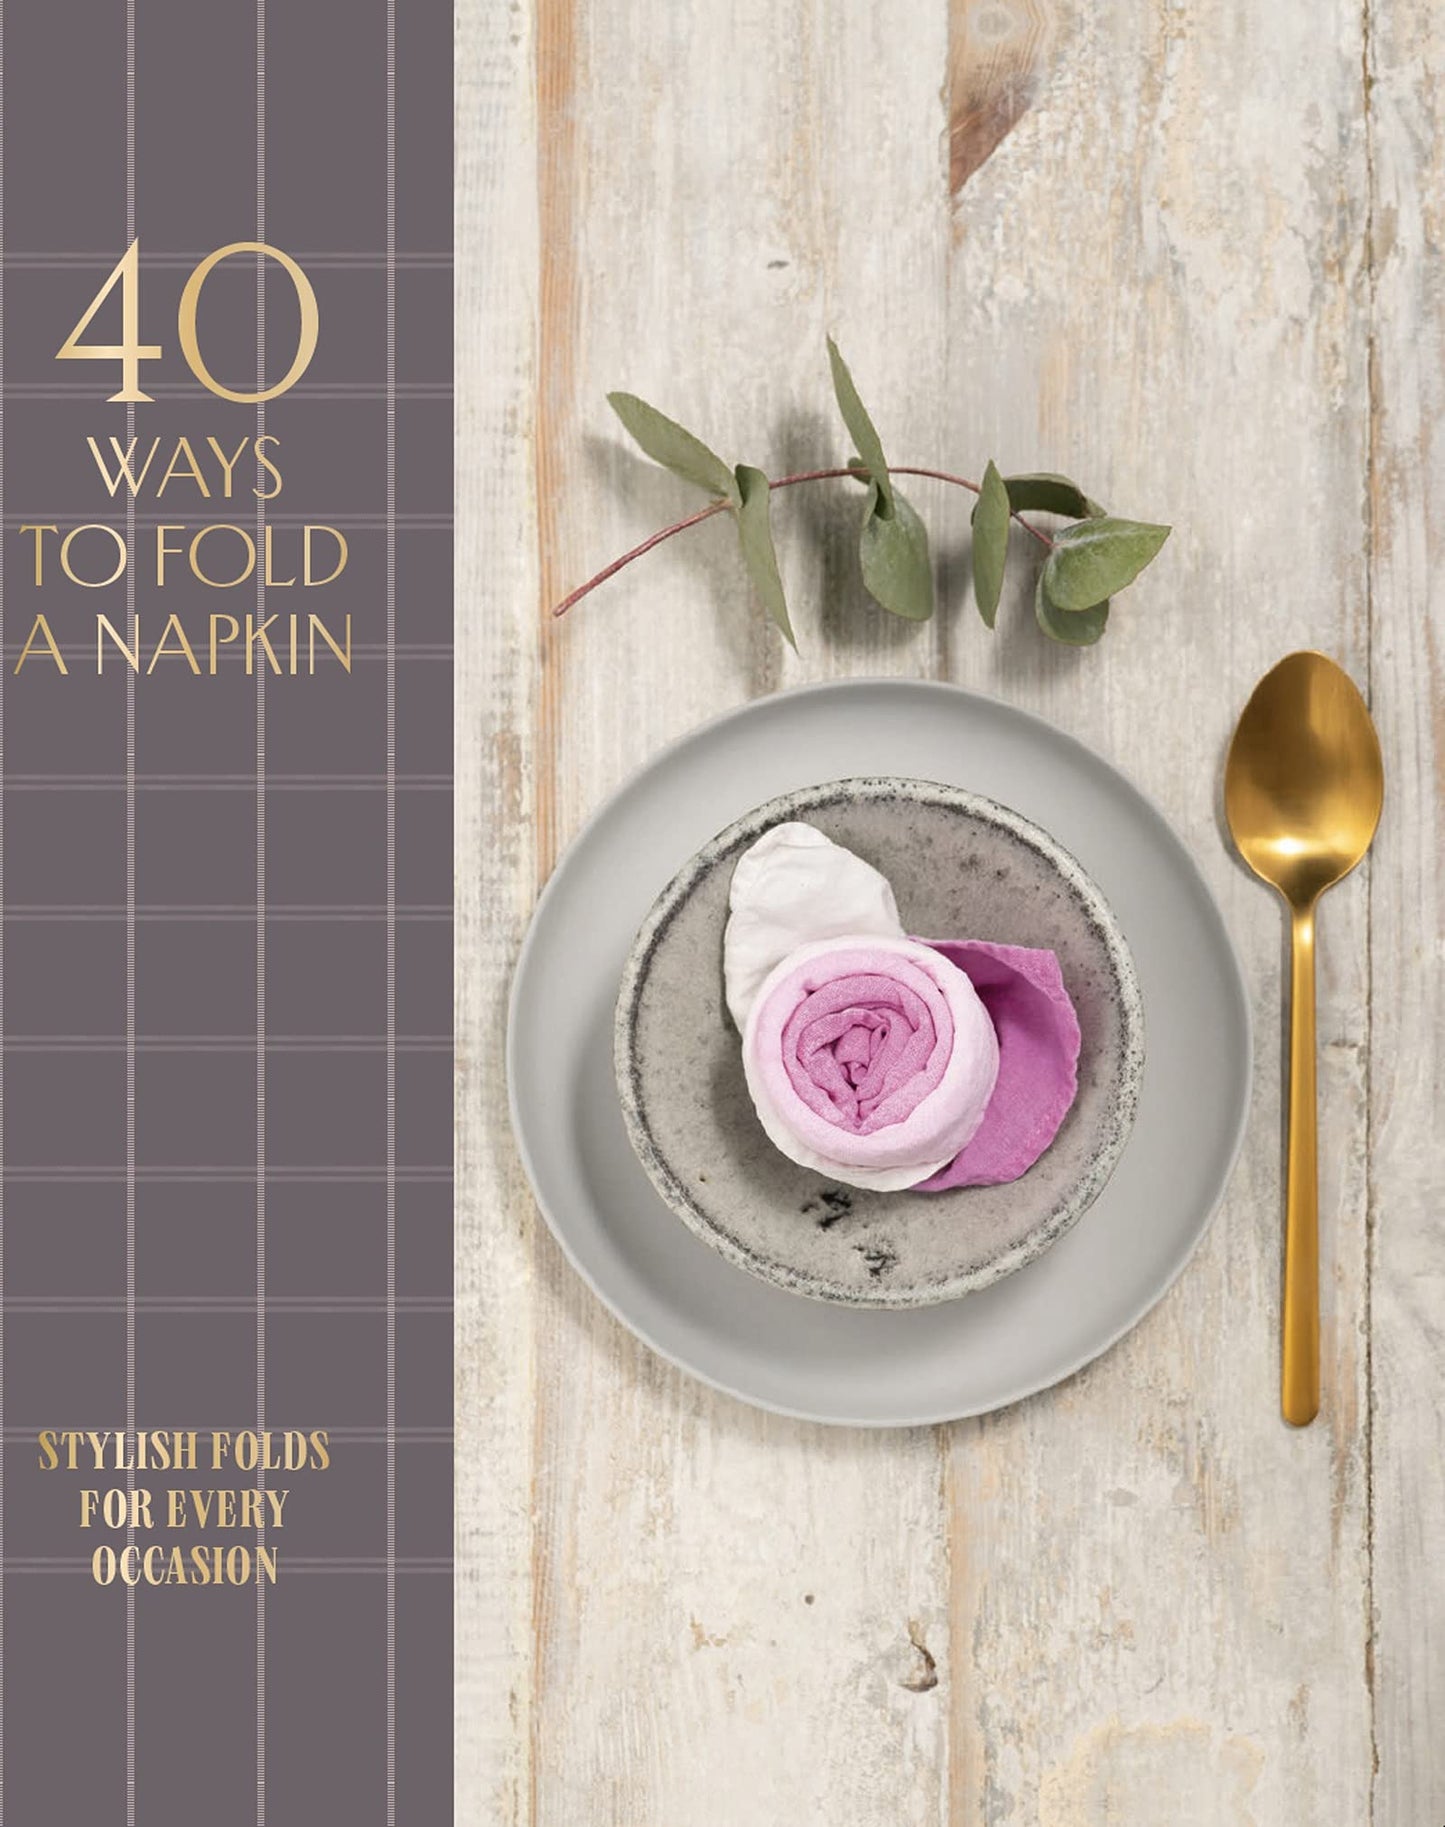 40 Ways to Fold a Napkin: Stylish folds for every occasion